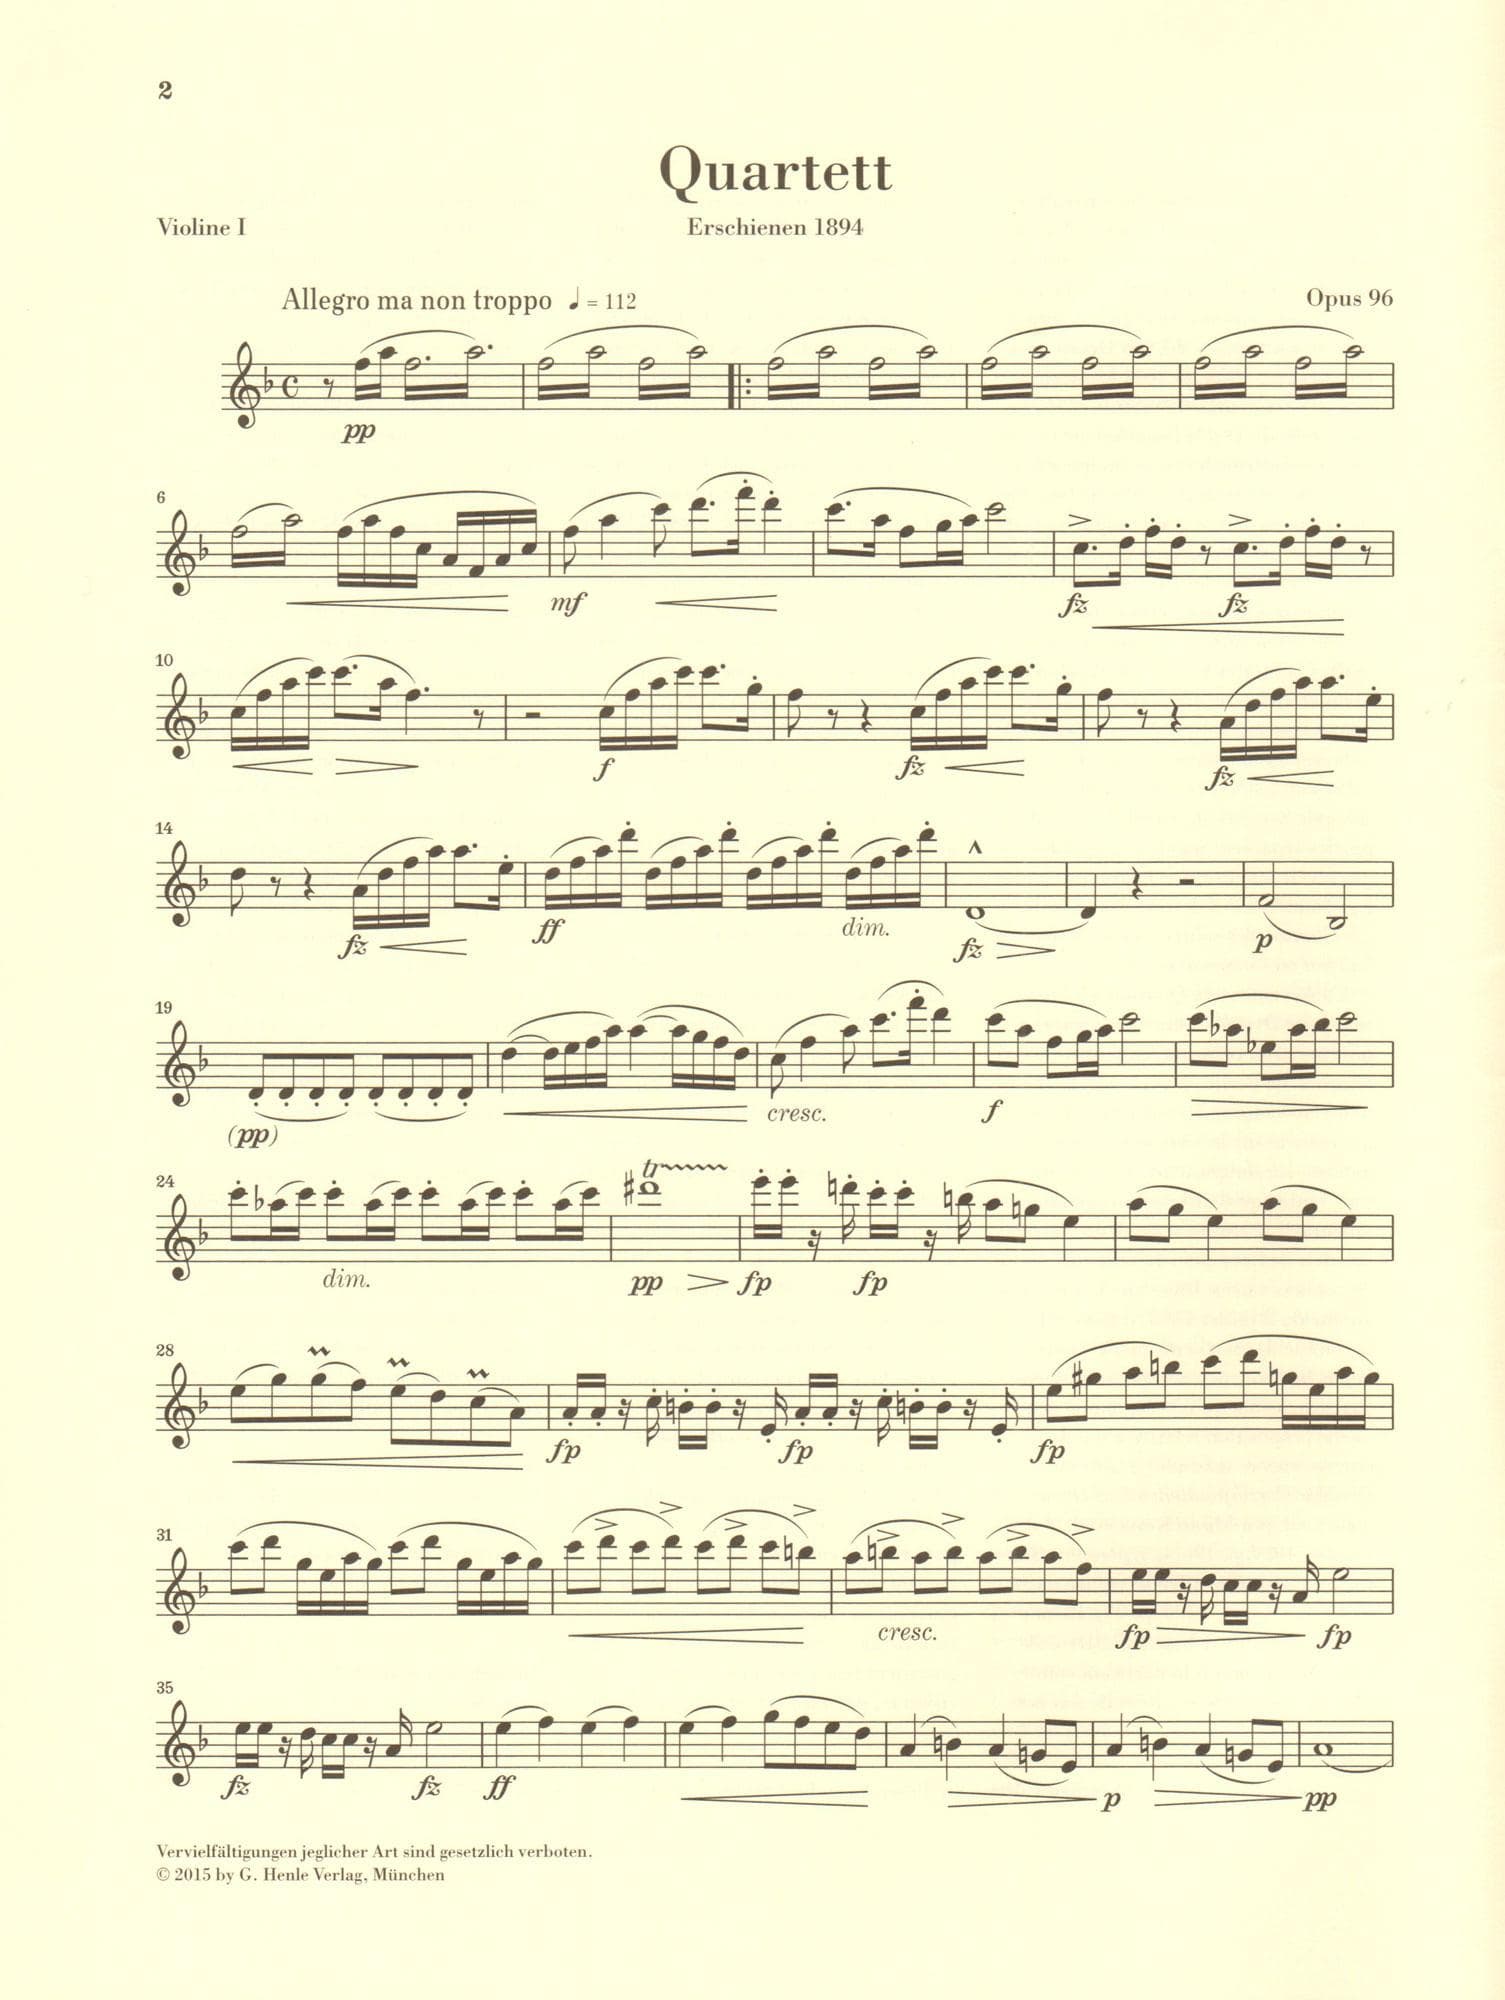 Dvorak, Antonin - String Quartet in F major - Opus 96 - Parts Only - Edited by Peter Jost - G Henle Verlag URTEXT